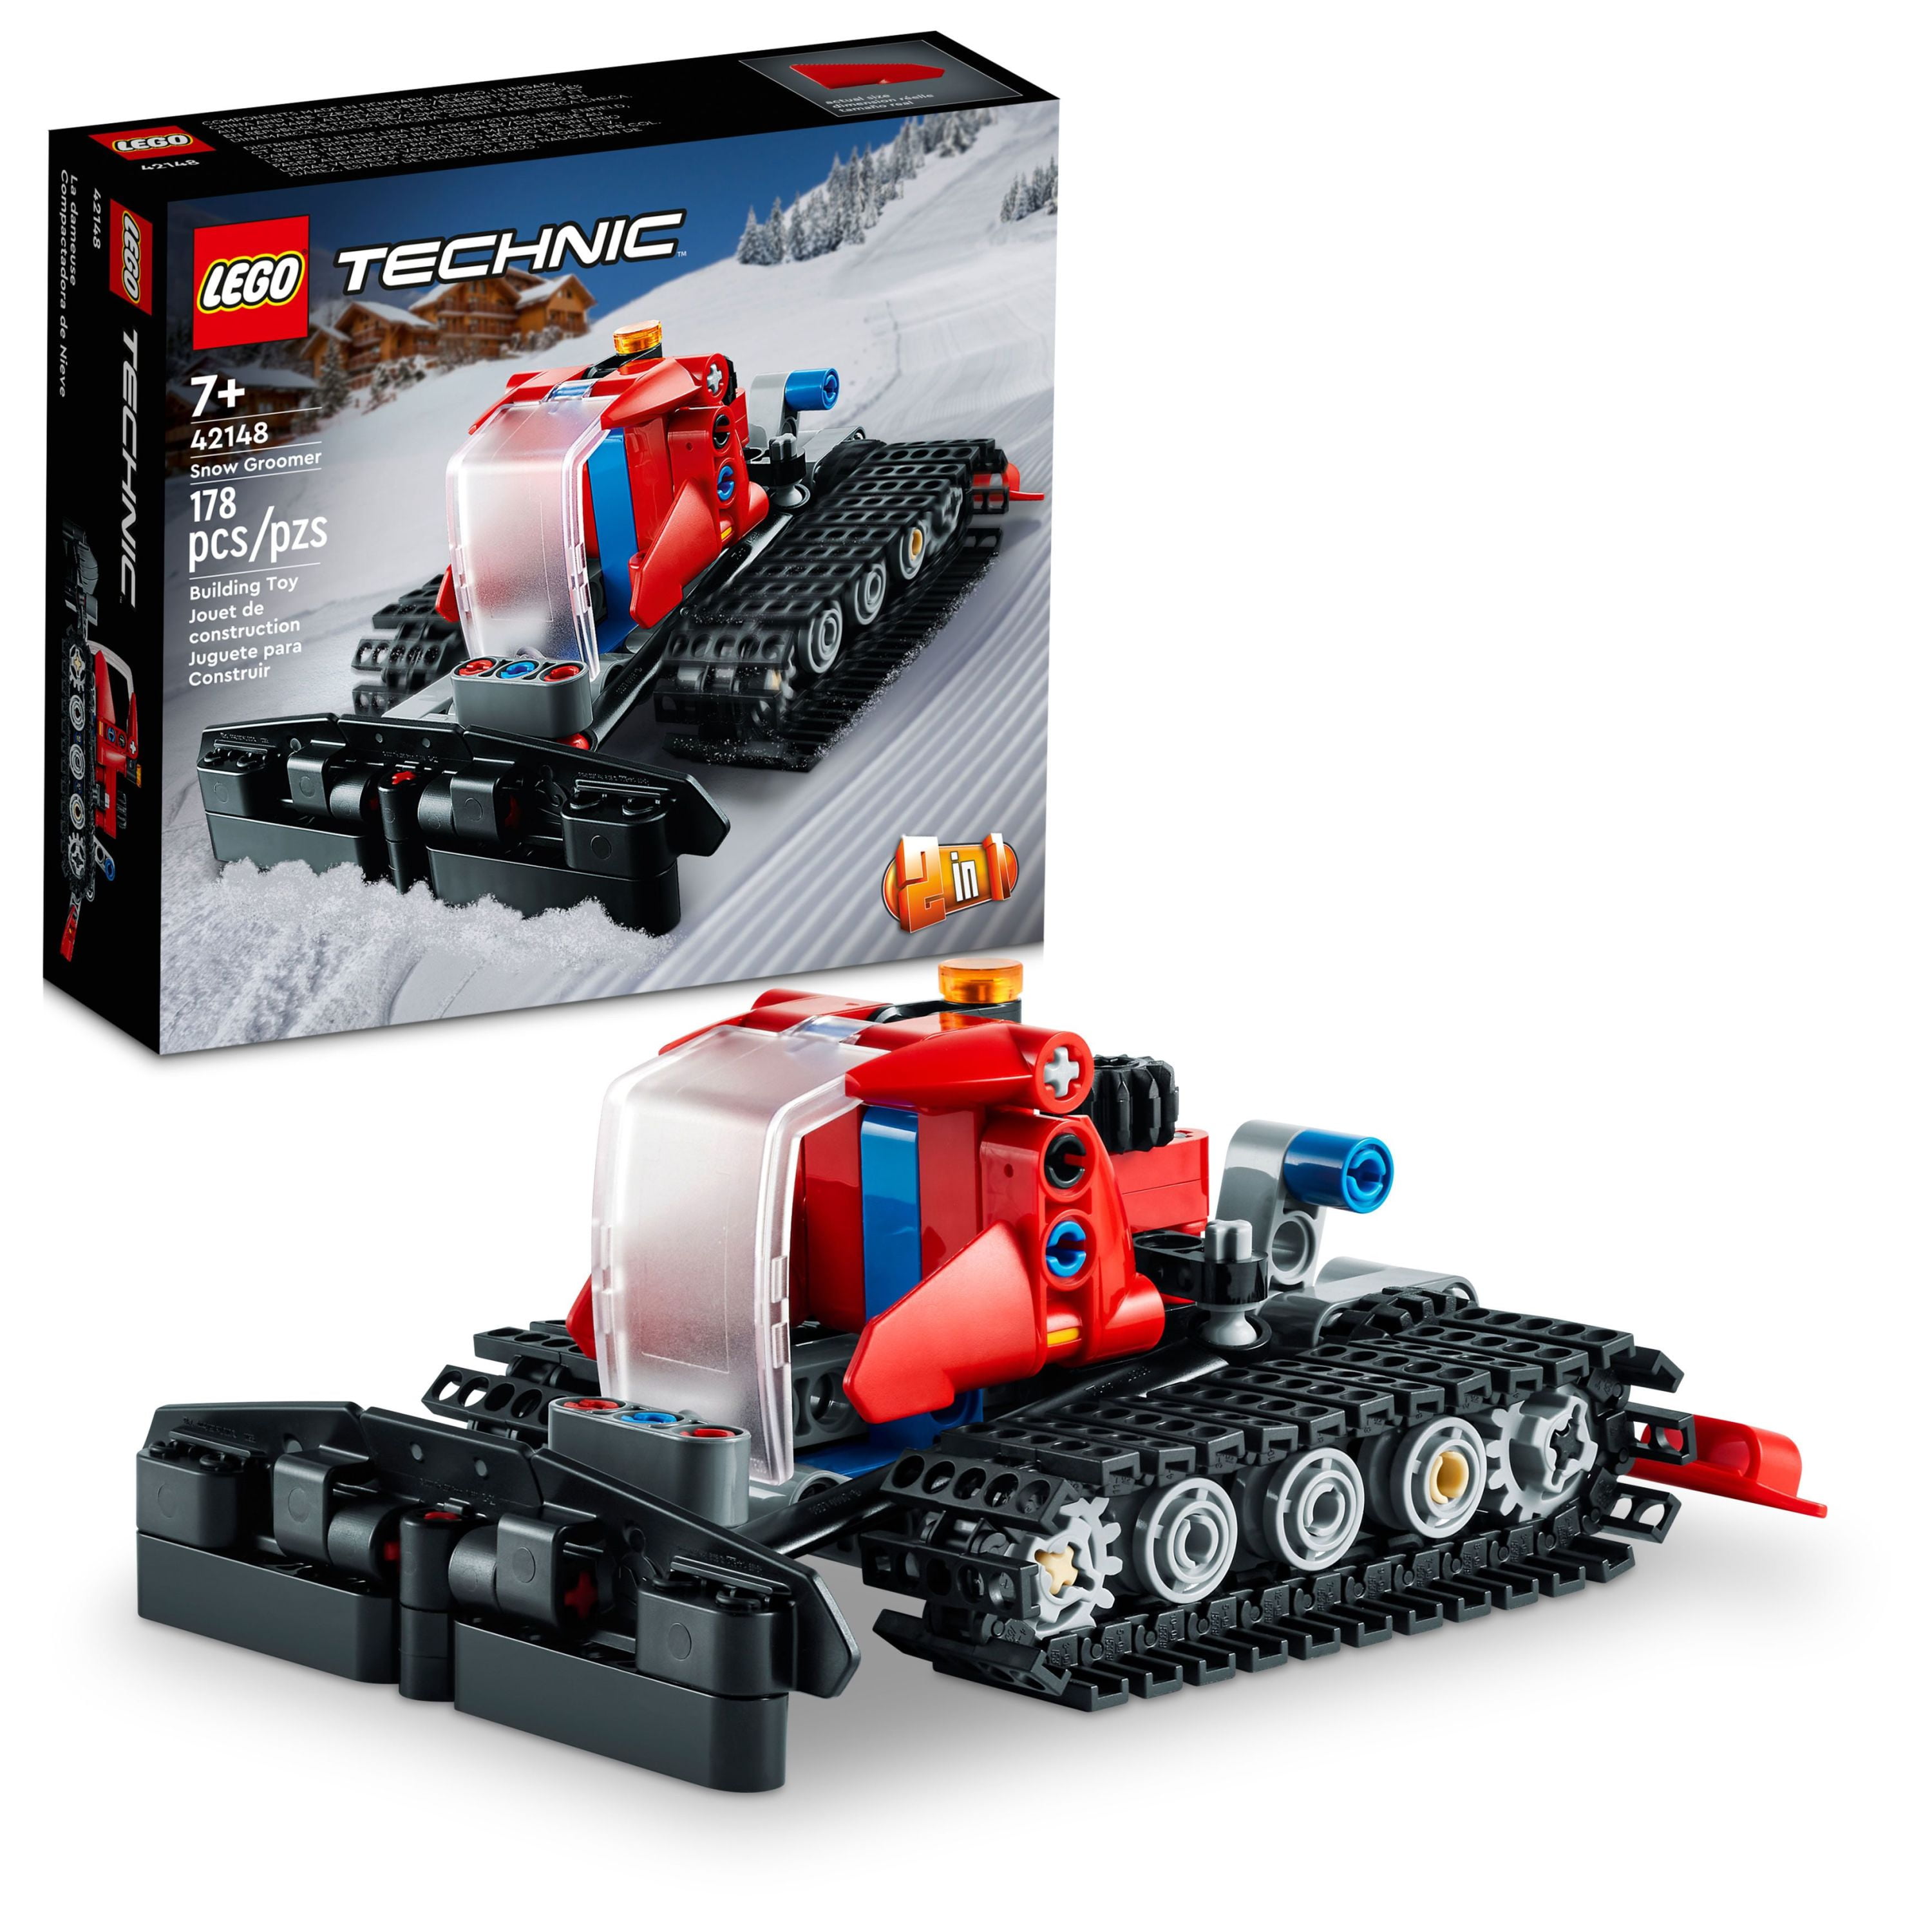 LEGO Technic Snow Groomer Snowmobile Set 42148 - Walmart.com